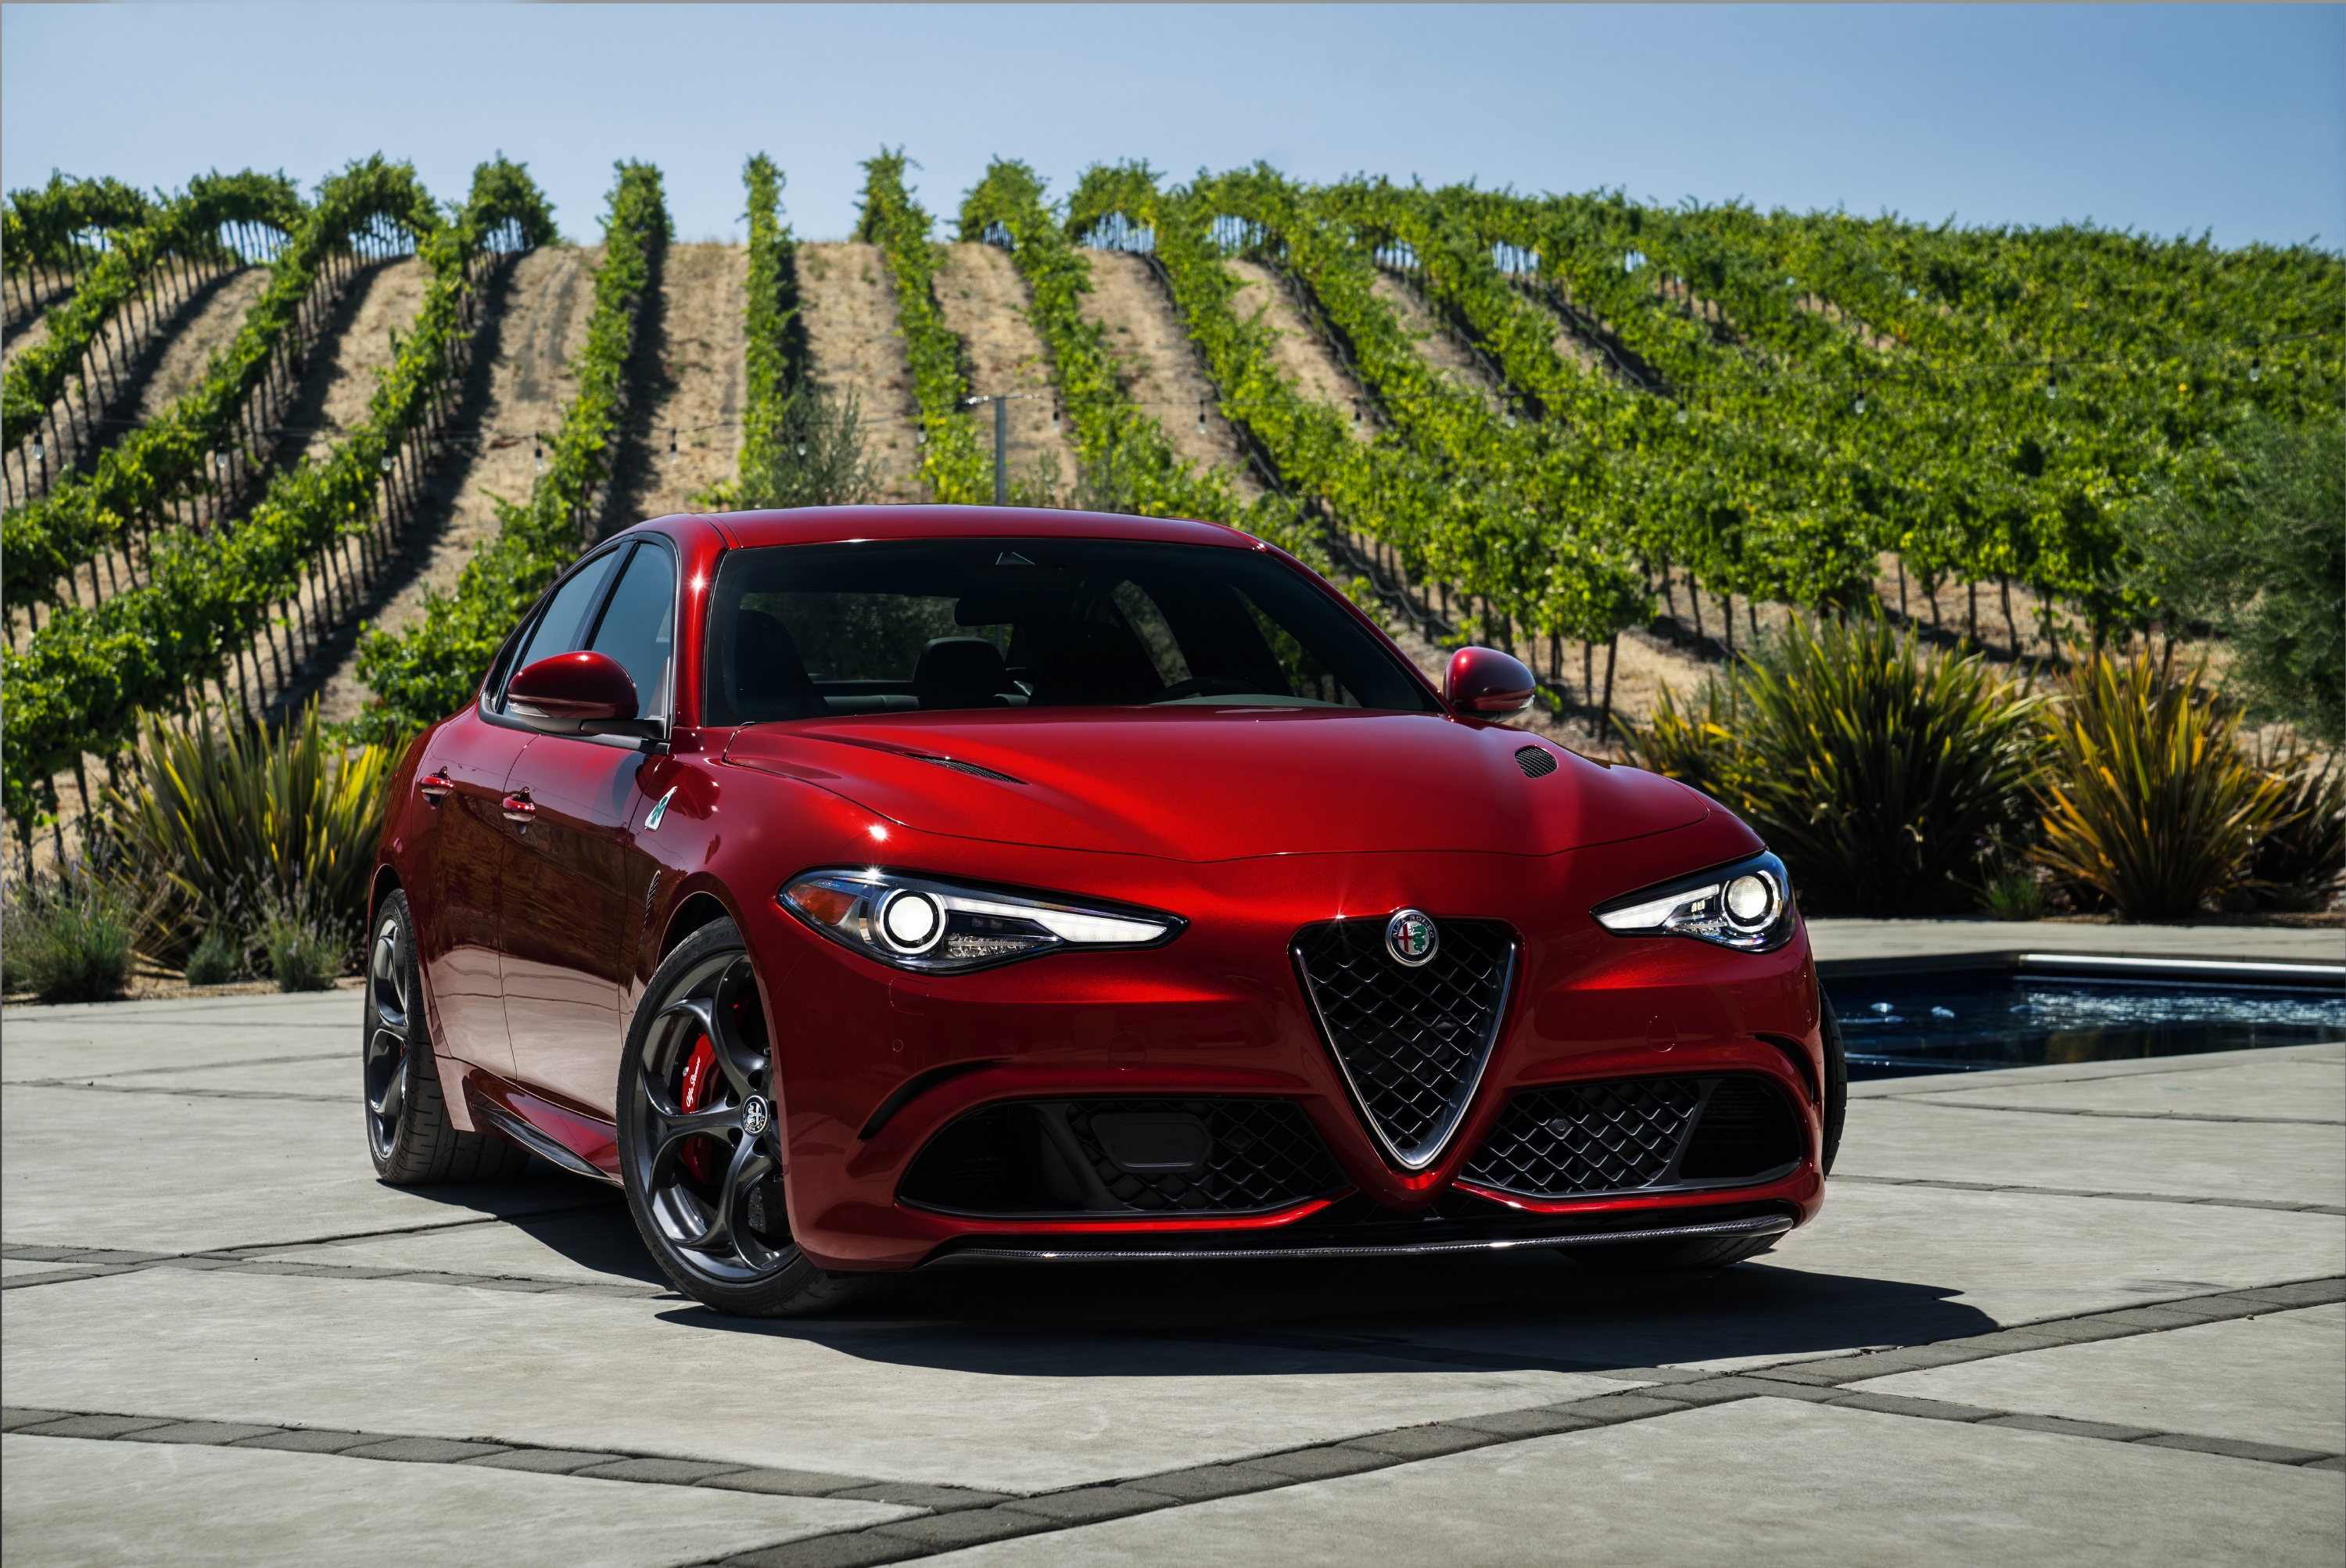 We Drive the NEW Alfa Romeo Giulia (VIDEO)